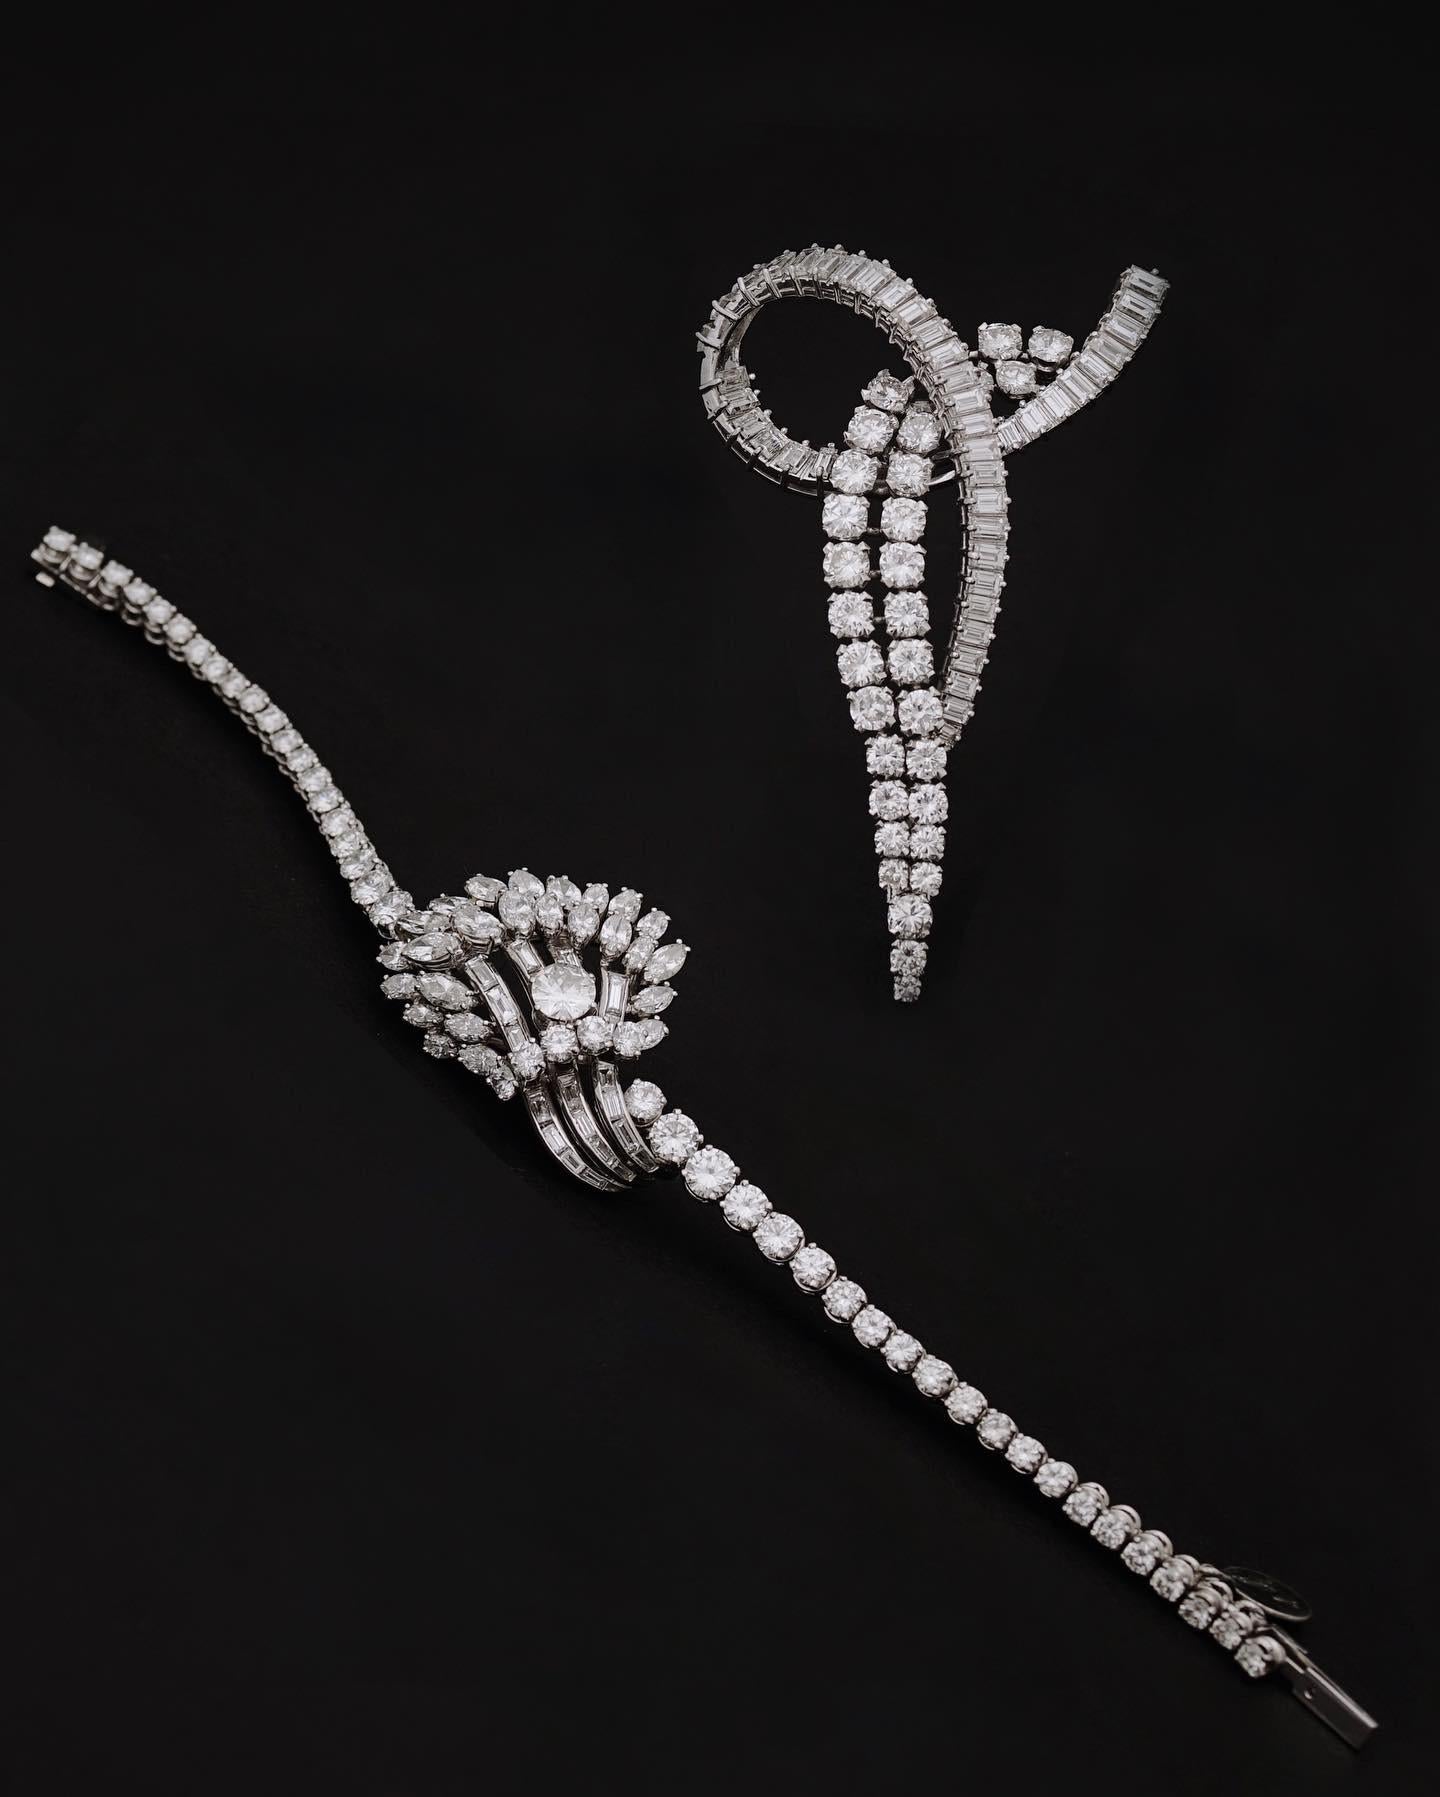 Brilliant Cut Diamond Brooch and a Diamond Bracelet '17 to 19 carats total', Set on Platinum